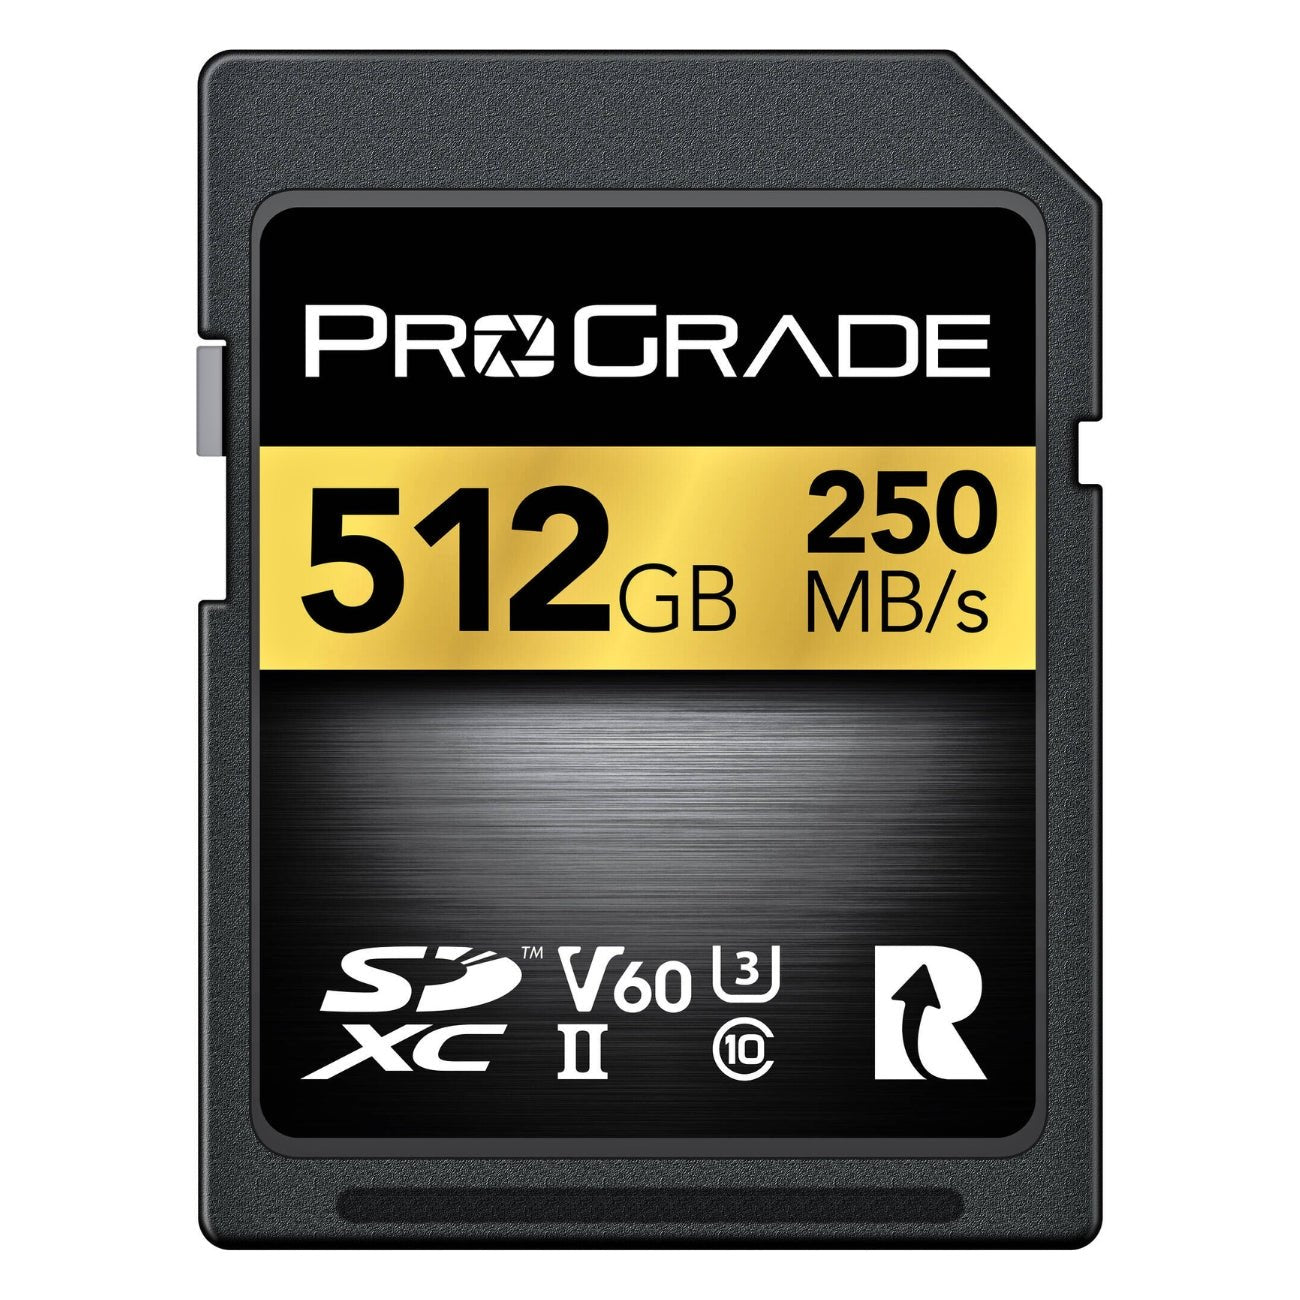 ProGrade Digital SDXC UHS-II V60 250R Memory Card (512GB)